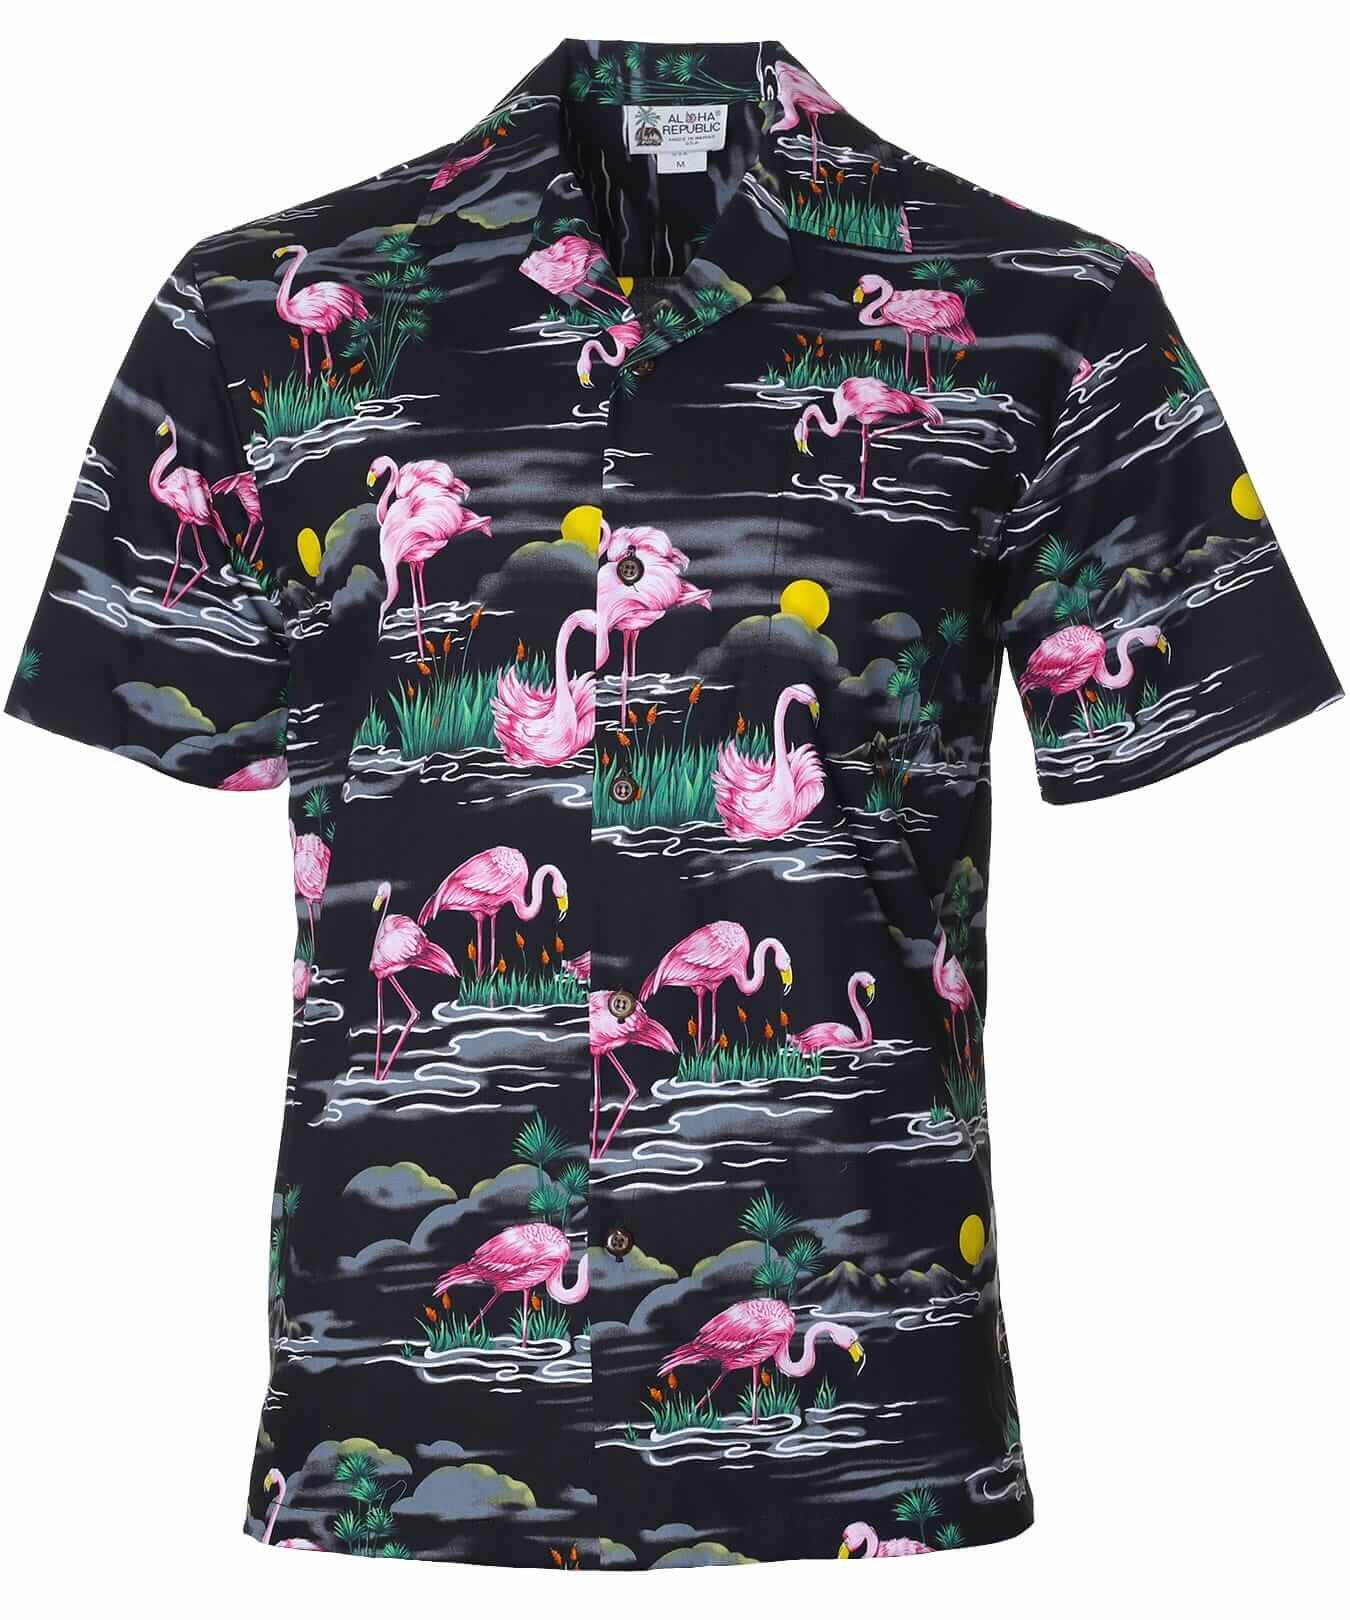 Flamingos Paradise Cotton Men's Shirt Black